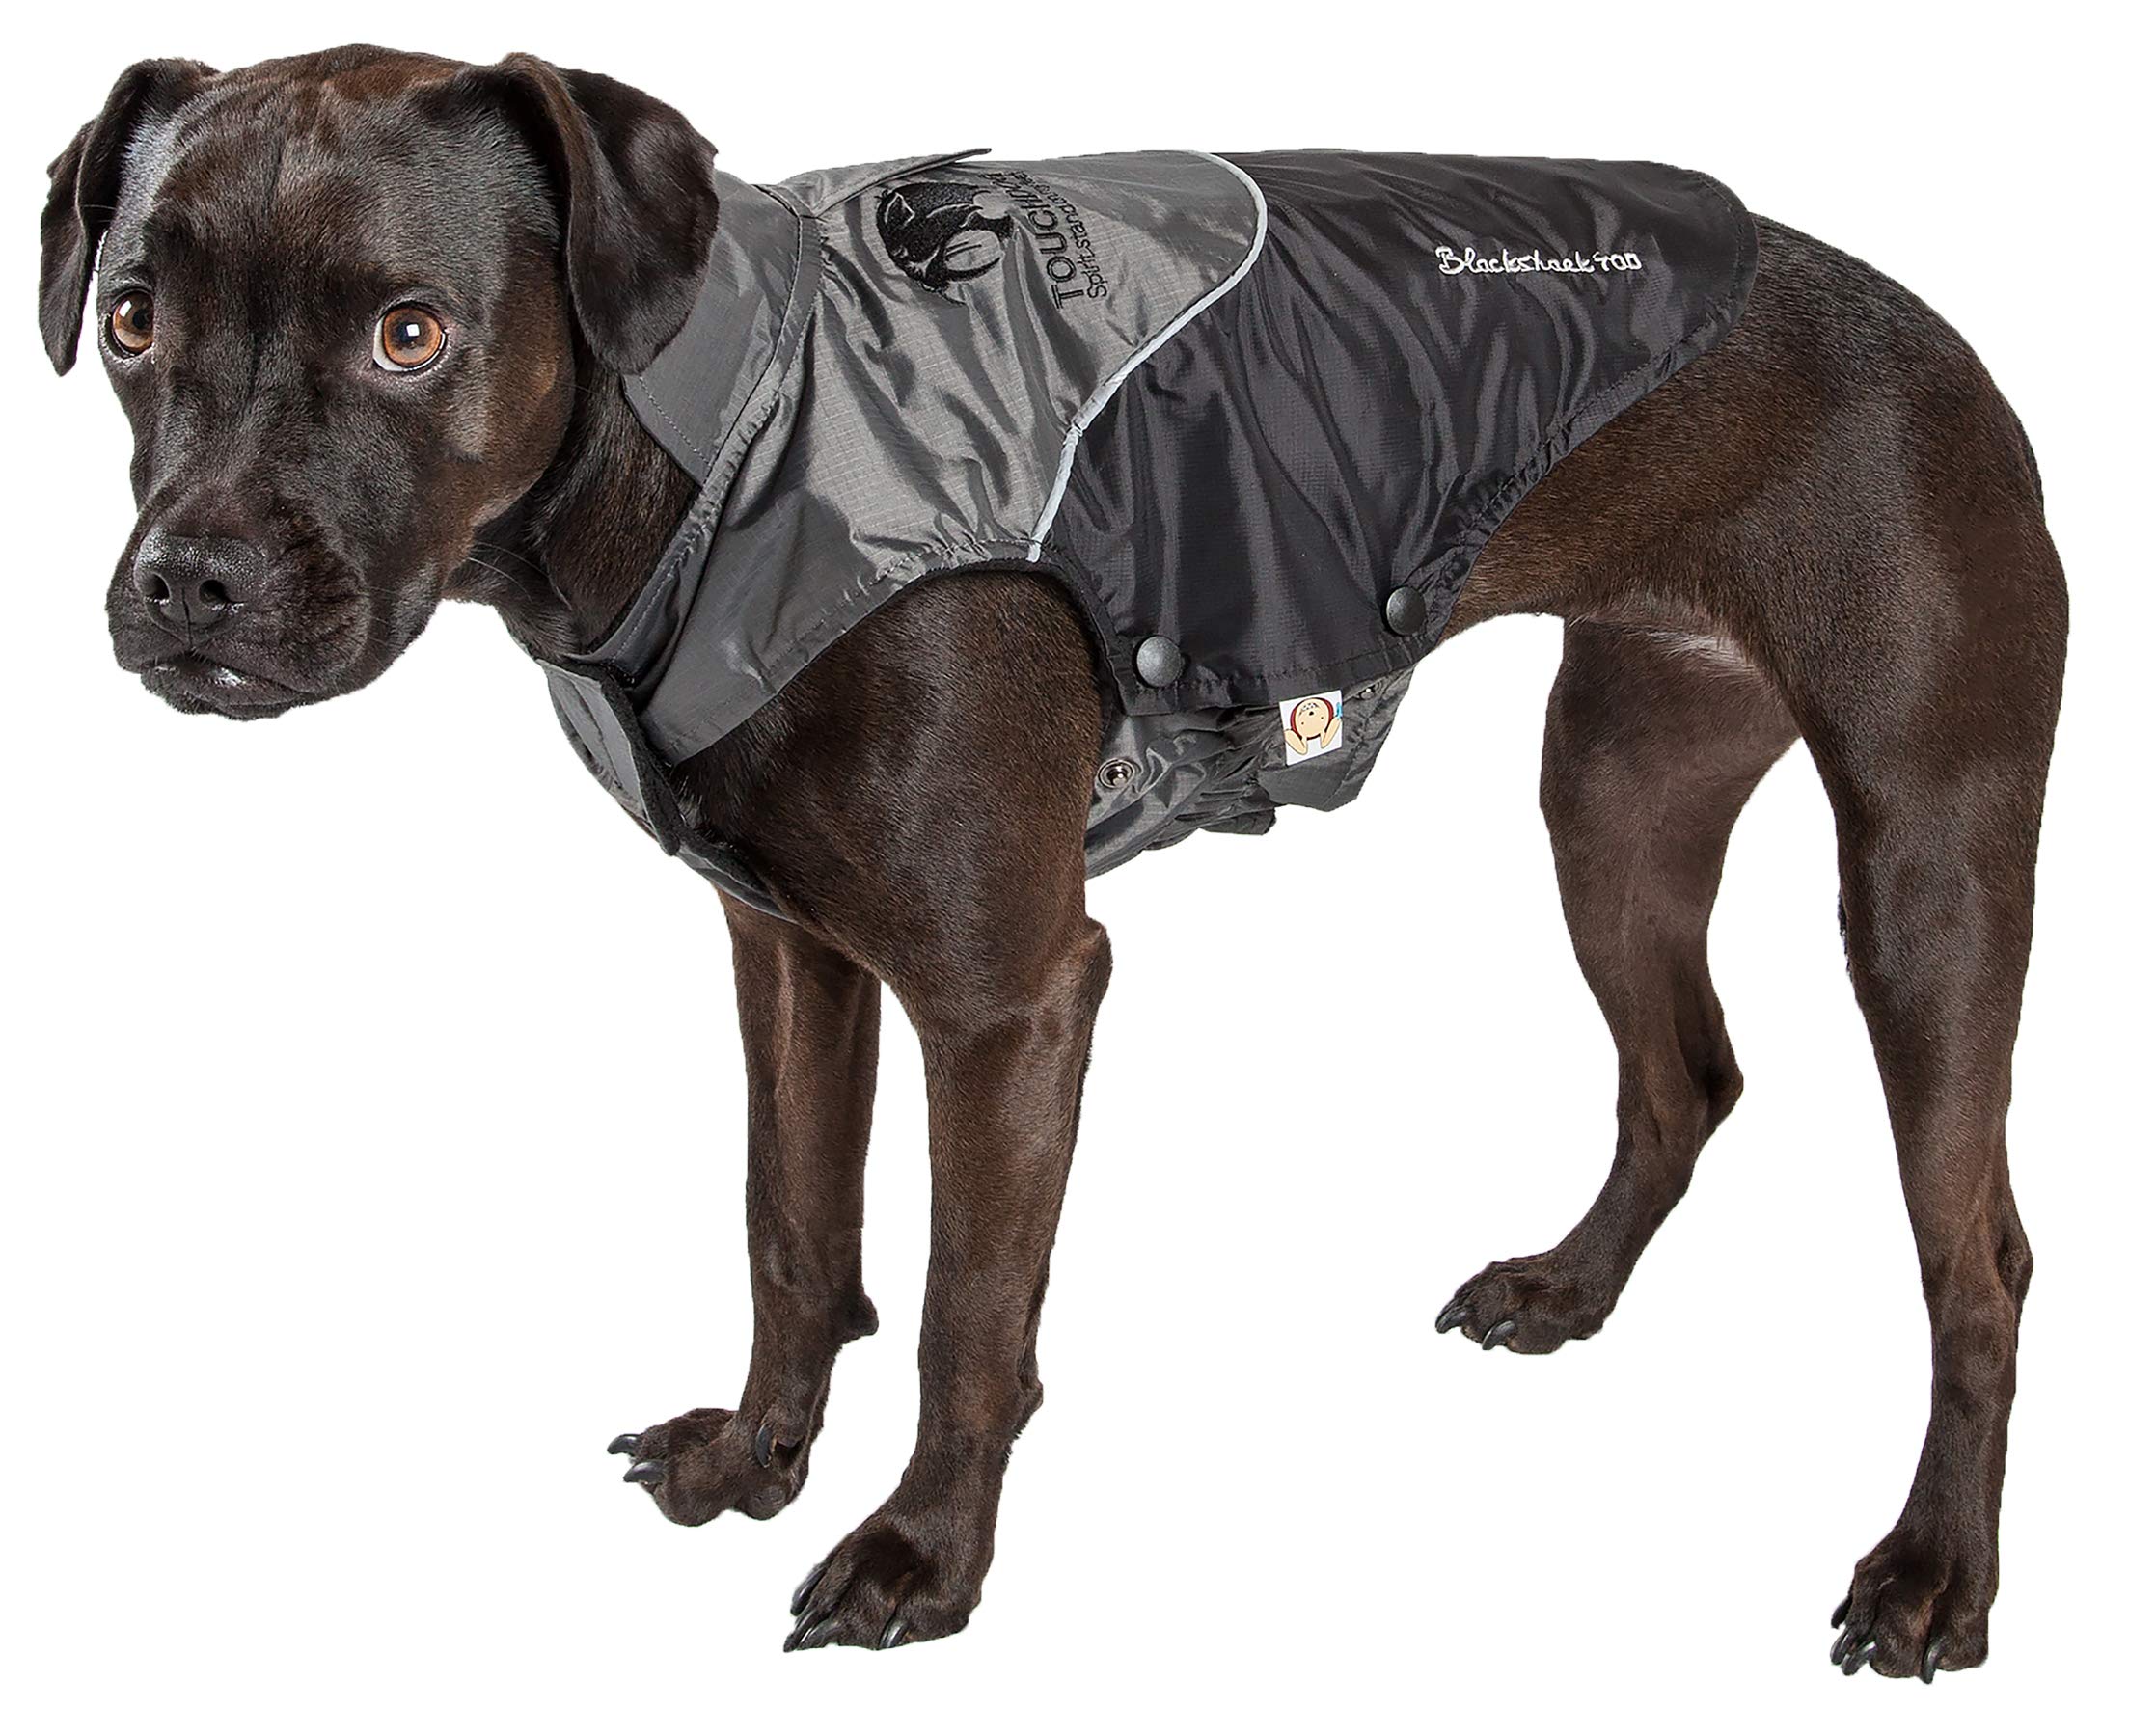 TOUcHDOg Subzero-Storm Waterproof 3M Reflective Pet Dog coat Jacket with Heavy-Duty Velcro w Blackshark Technology, Large, Black